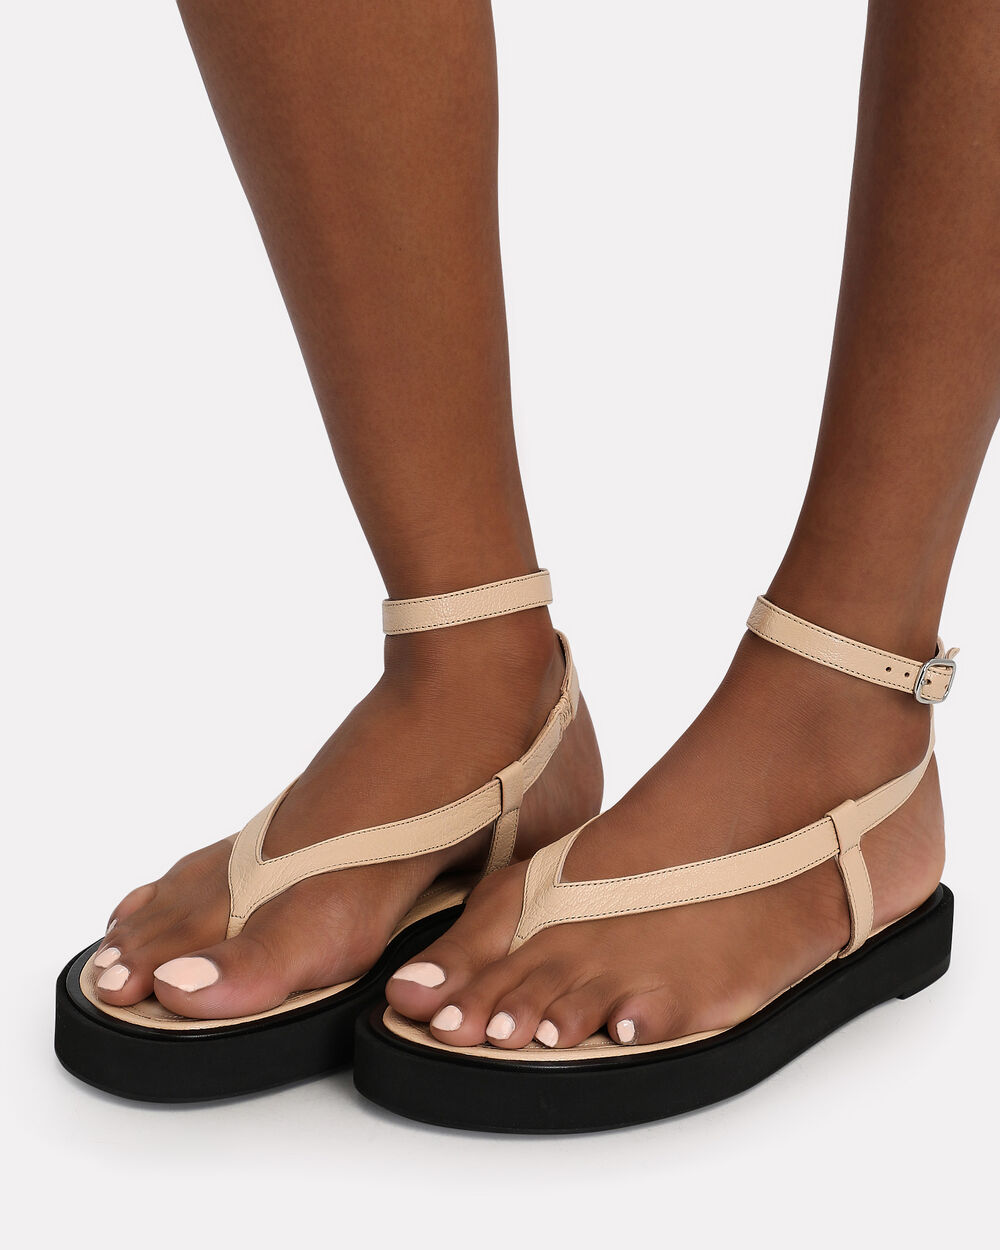 By Cece Strappy Leather Flatform Sandals INTERMIX®